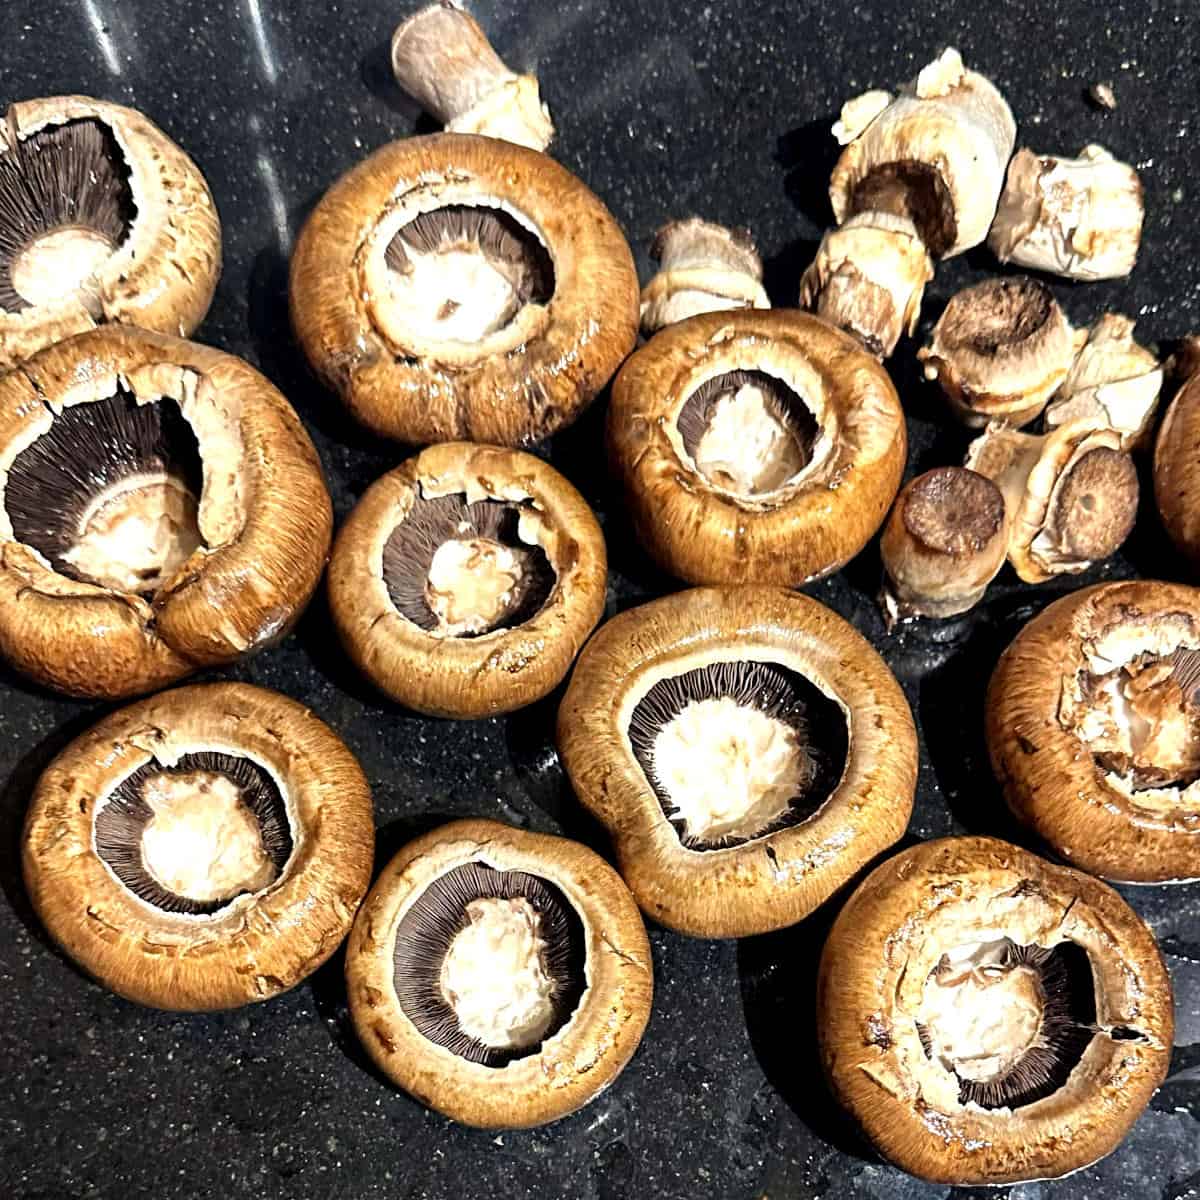 Mushroom caps and stems separated.